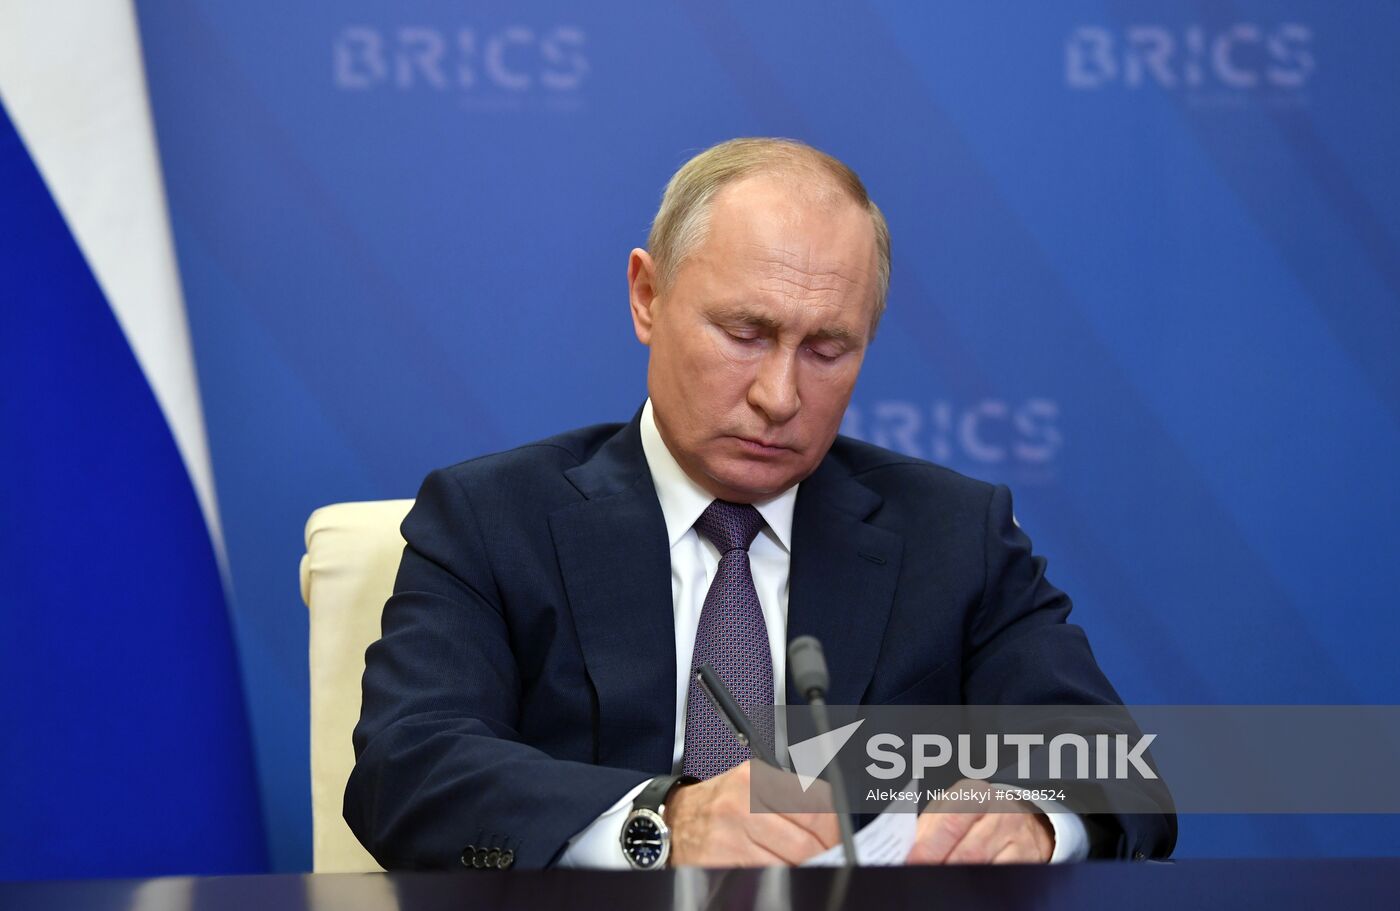 President of Russia Vladimir Putin takes part in XII BRICS Summit